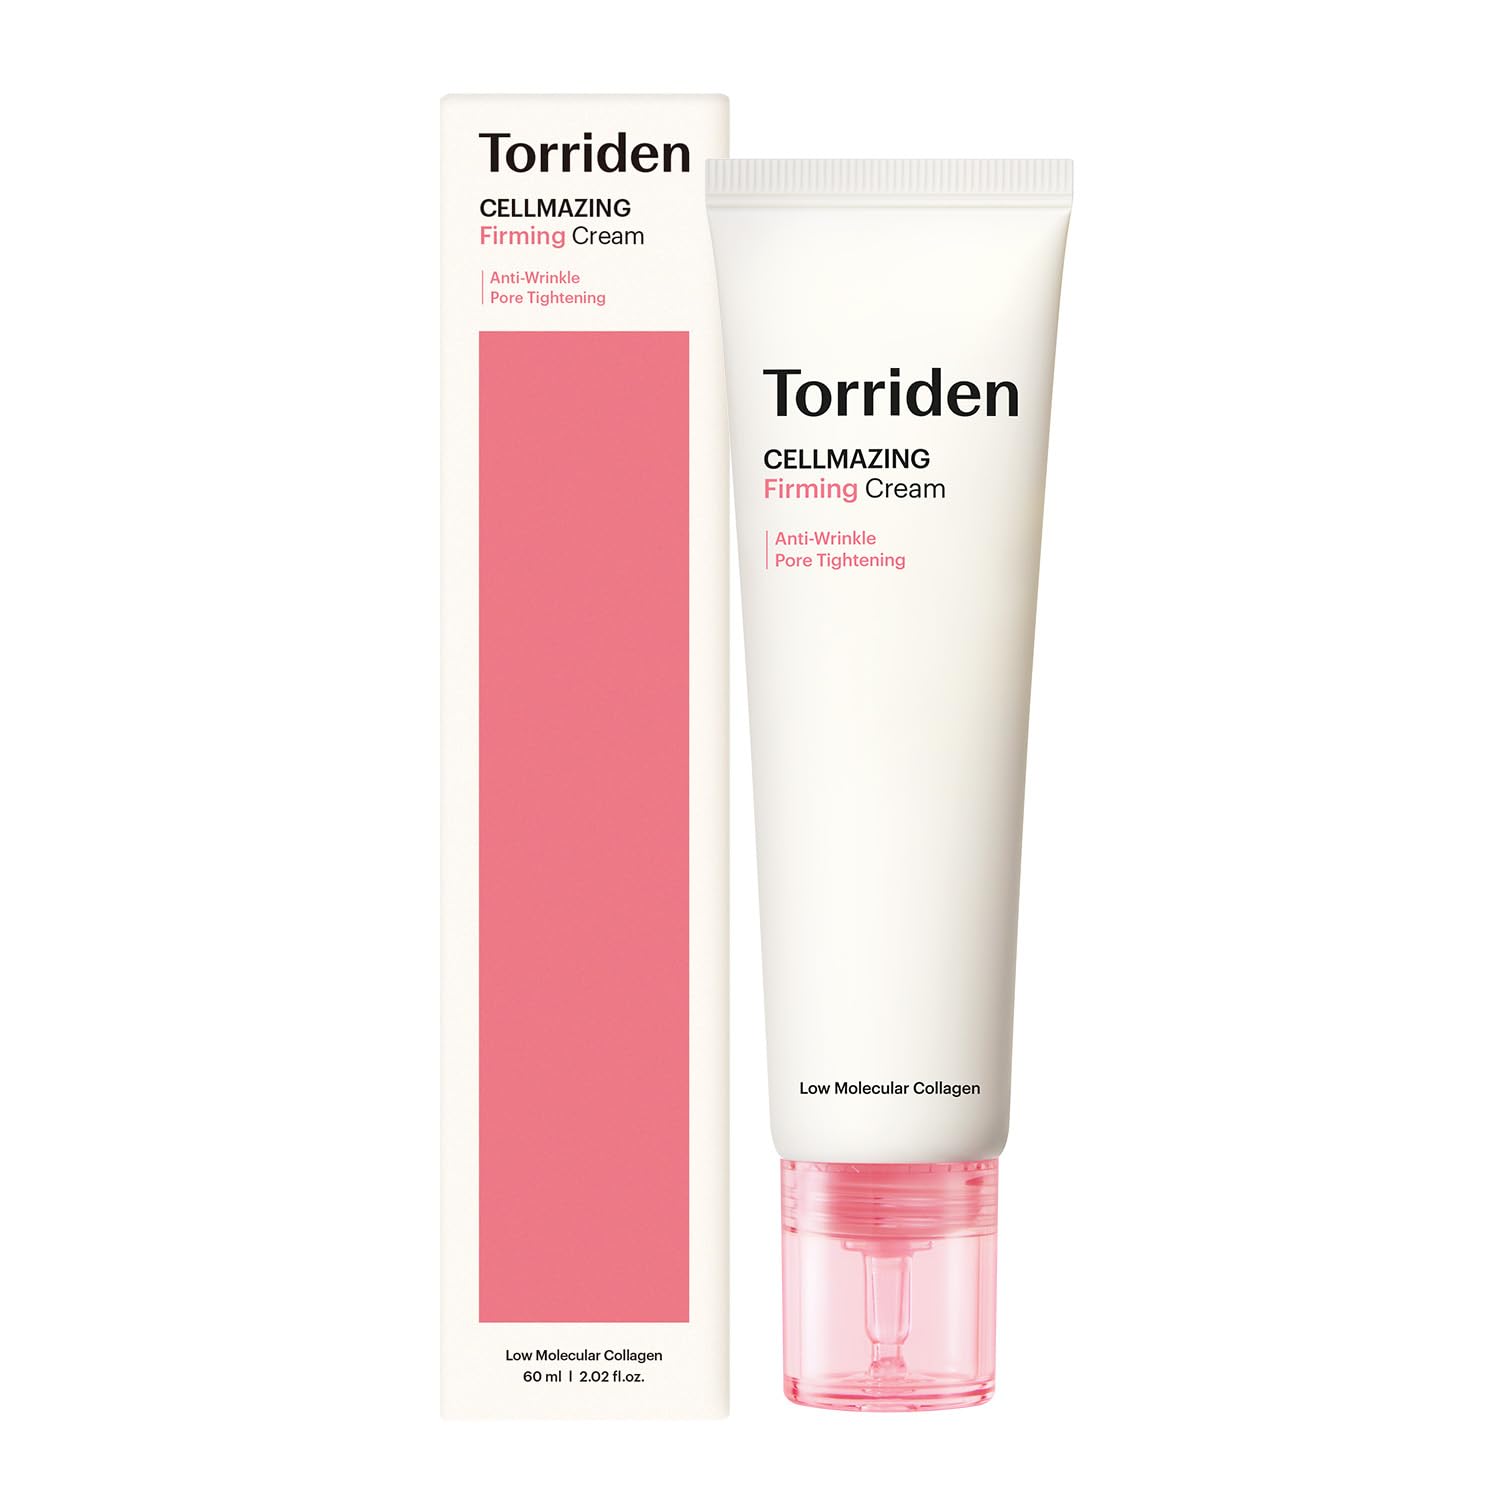 Kem Dưỡng Torriden Cellmazing Firming Cream 60ml